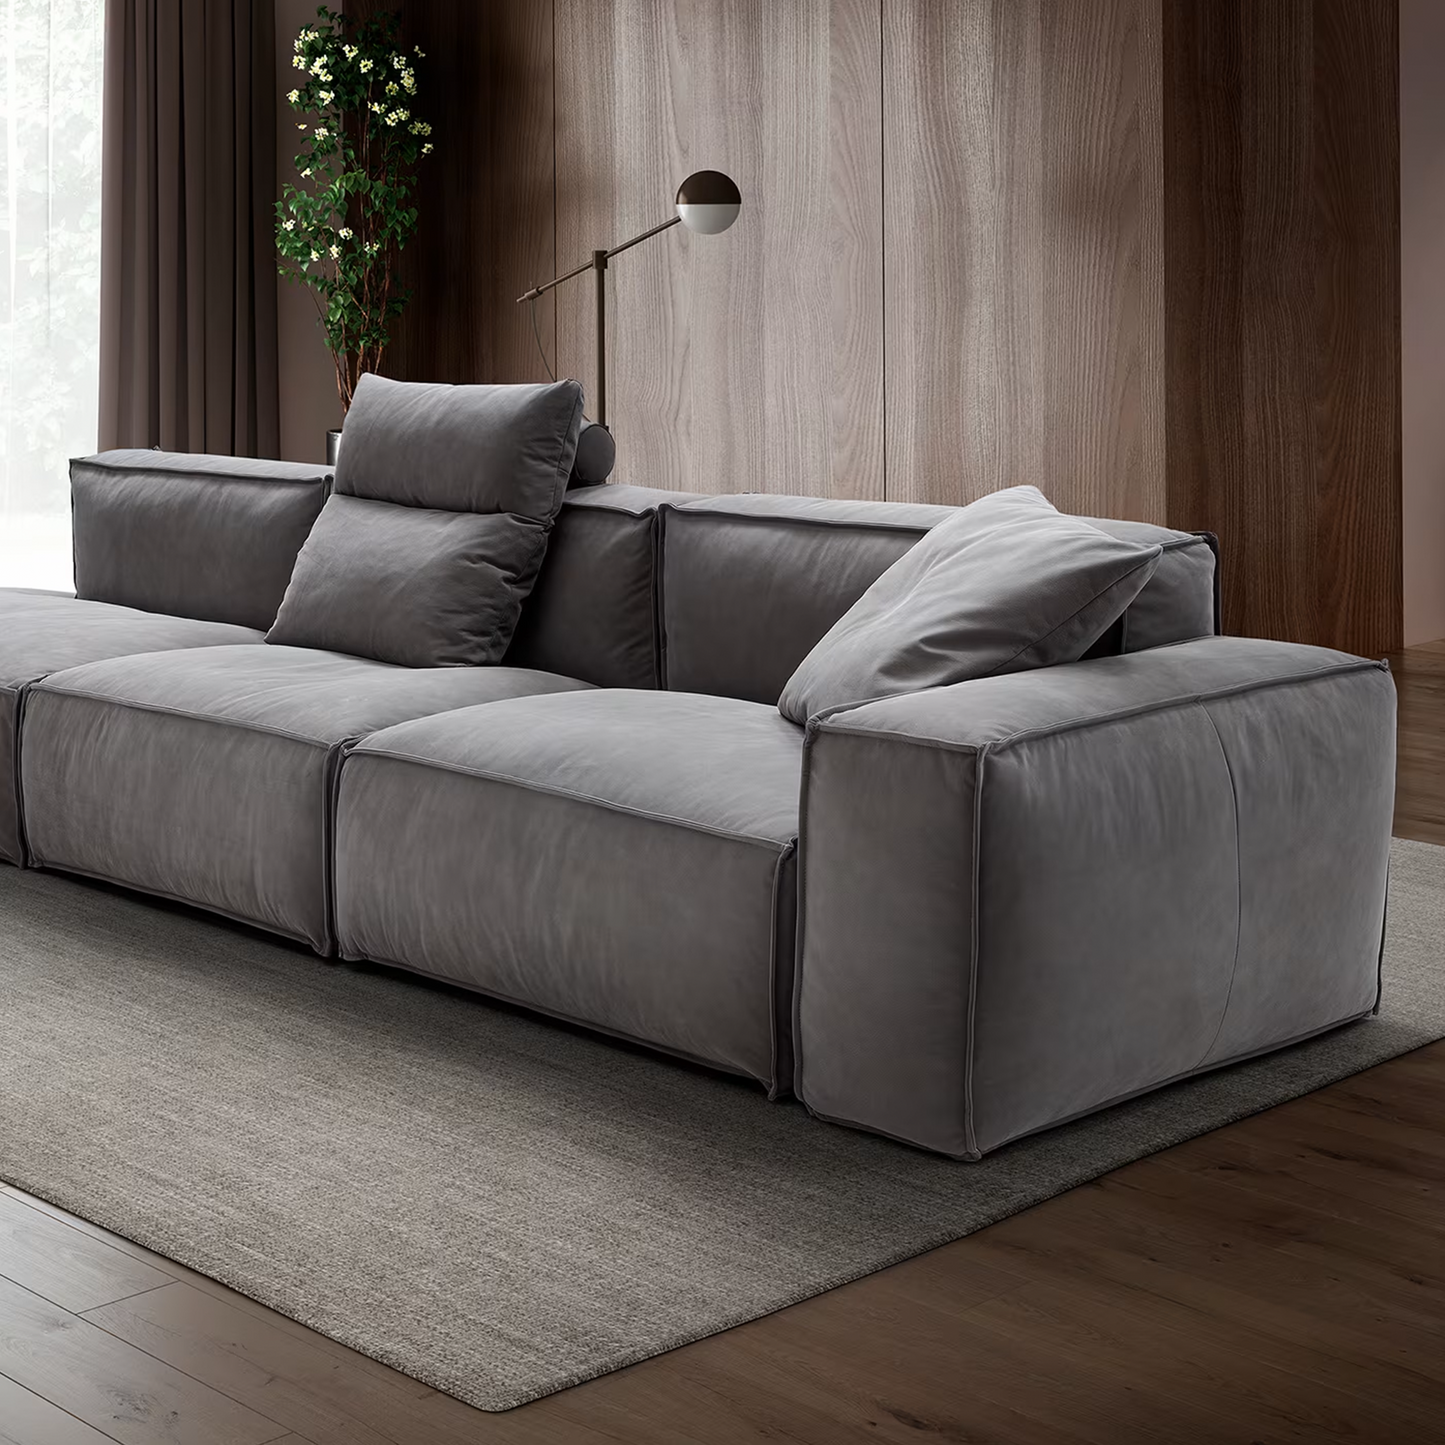 Franco Ferri Astor 3 sofa